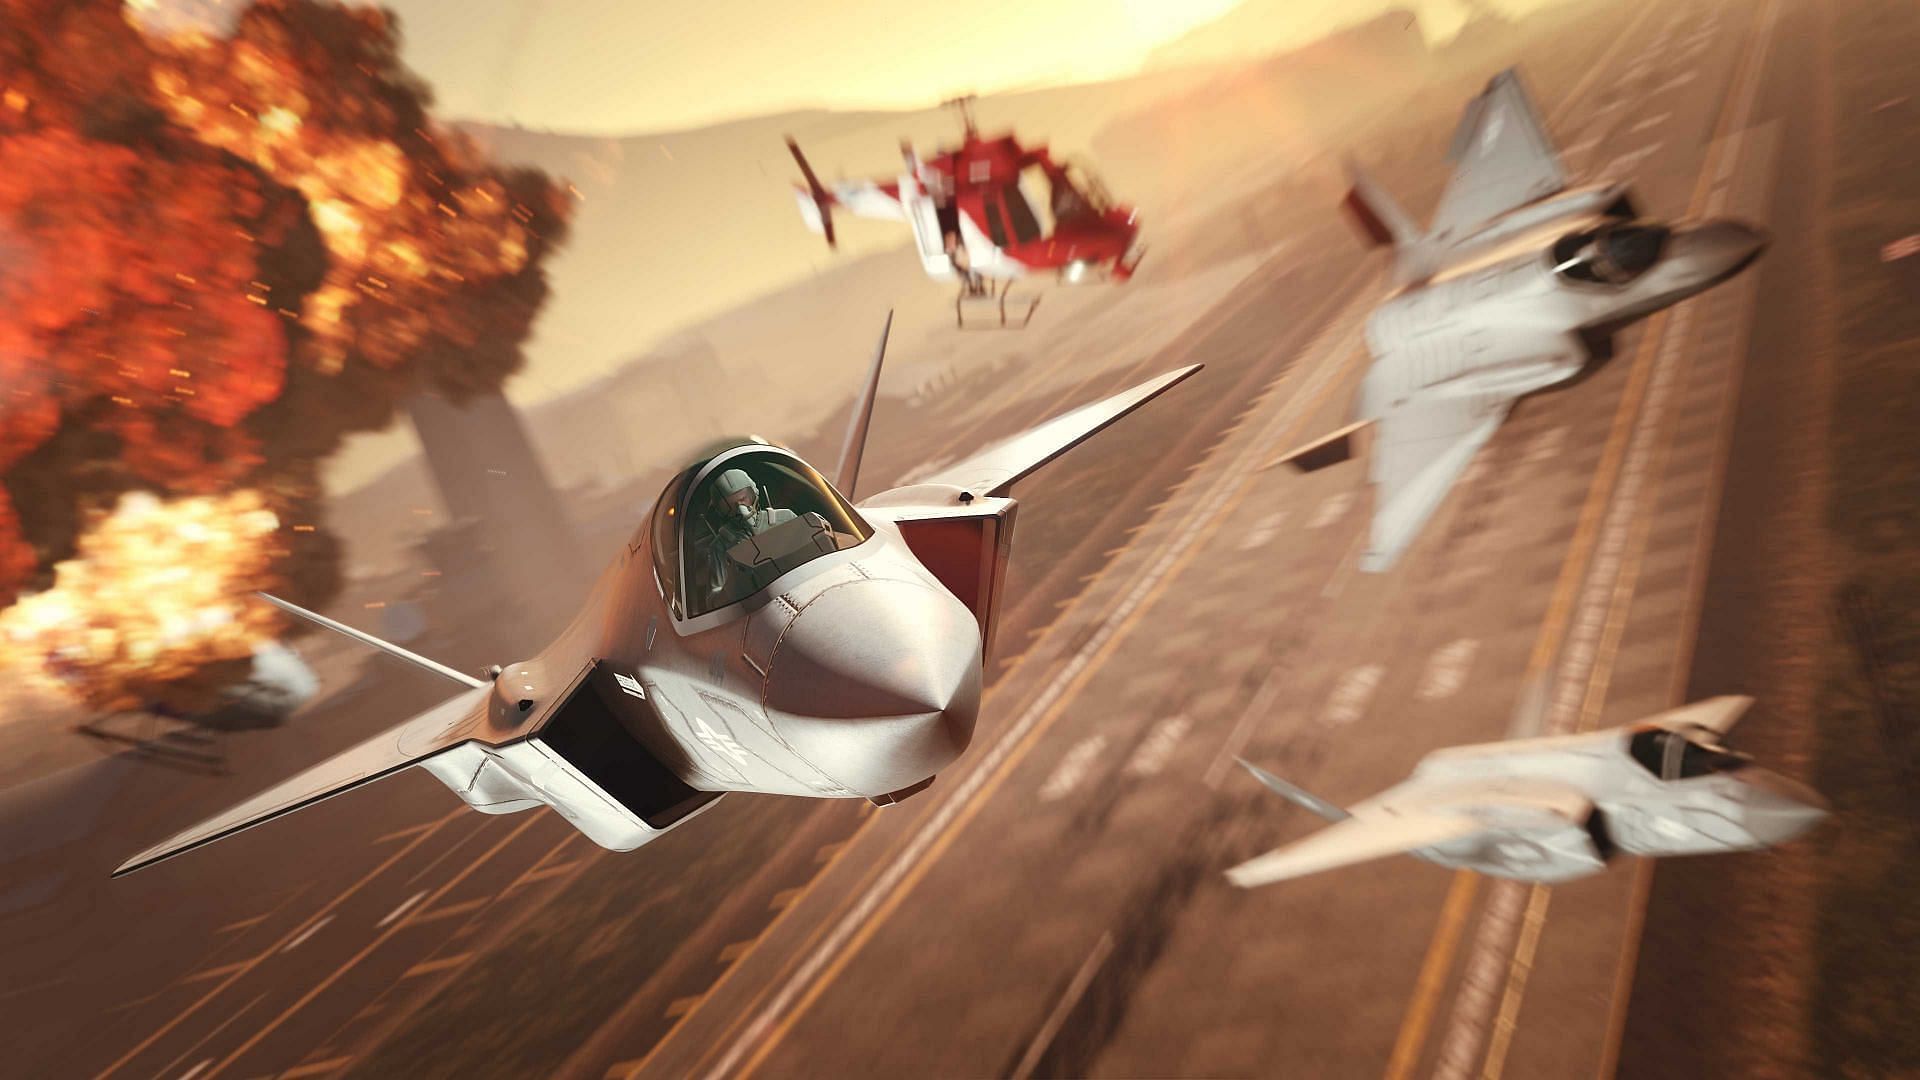 The On Parade mission involves the new F-160 Raiju (Image via Rockstar Games)